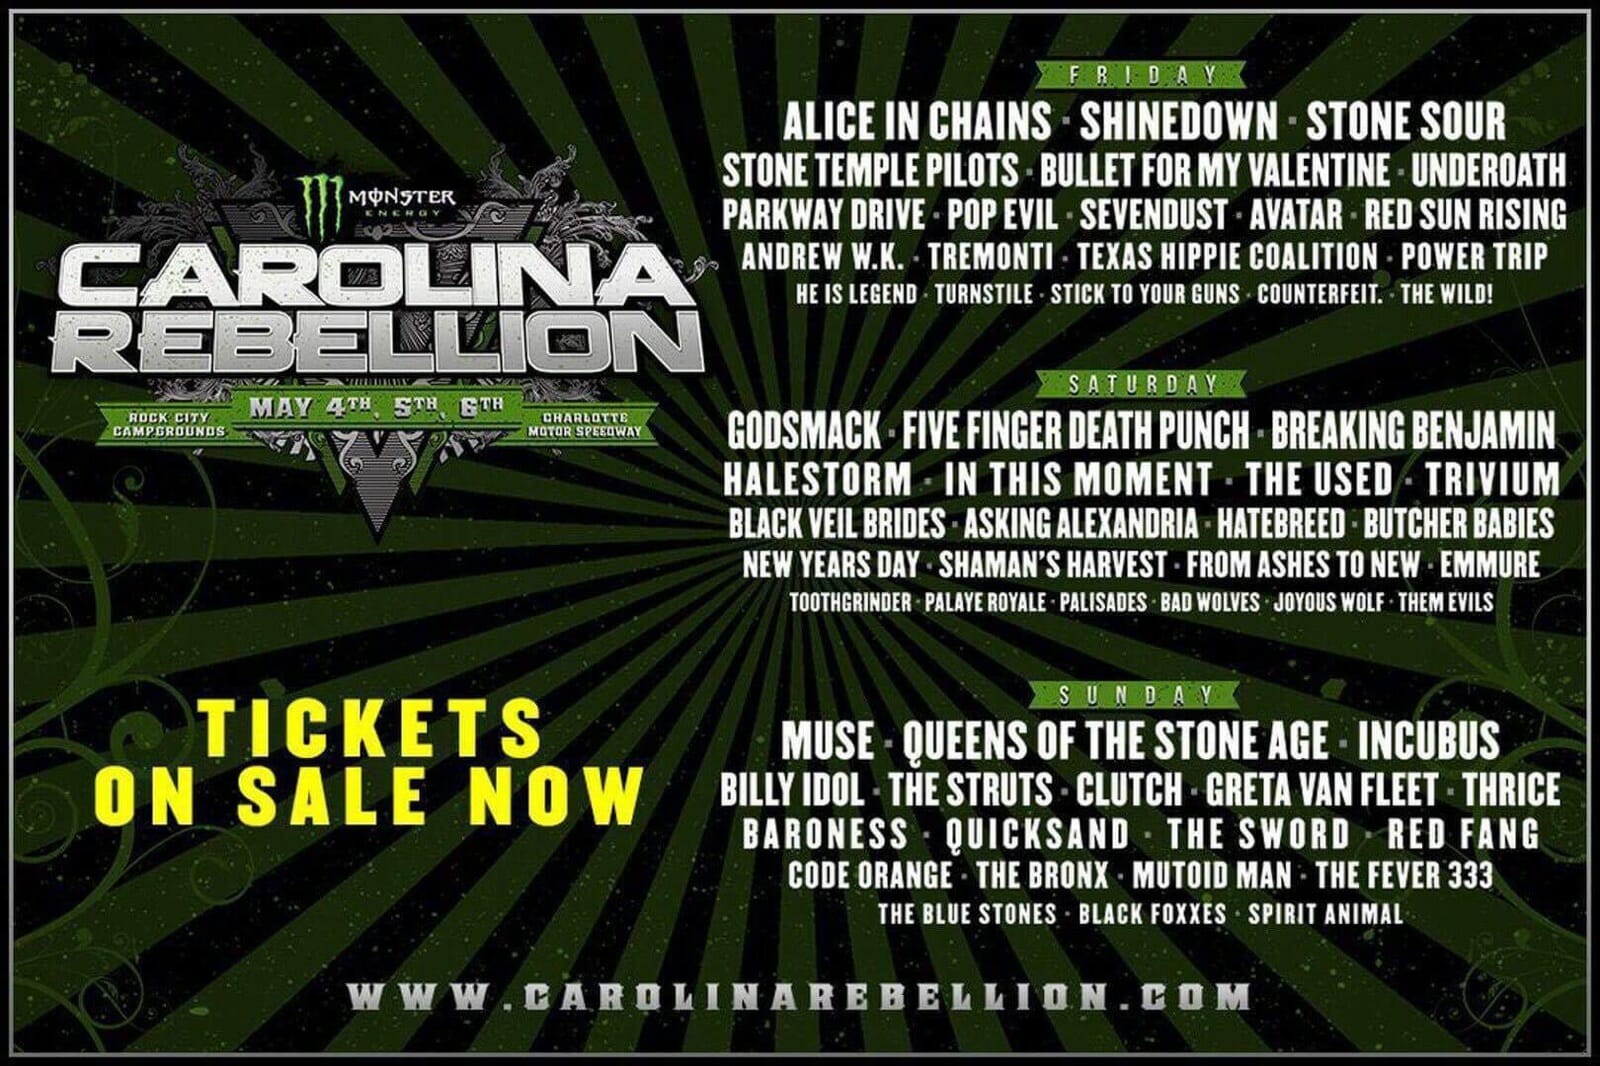 Carolina Rebellion 2018 Alice in Chains, Shinedown, Stone Sour and more